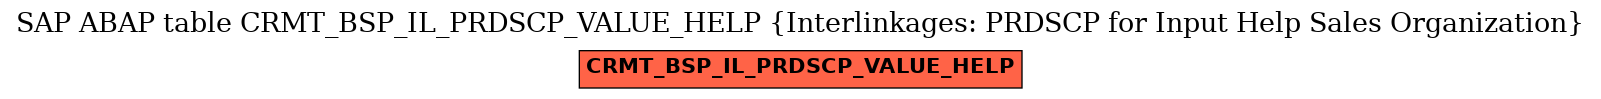 E-R Diagram for table CRMT_BSP_IL_PRDSCP_VALUE_HELP (Interlinkages: PRDSCP for Input Help Sales Organization)